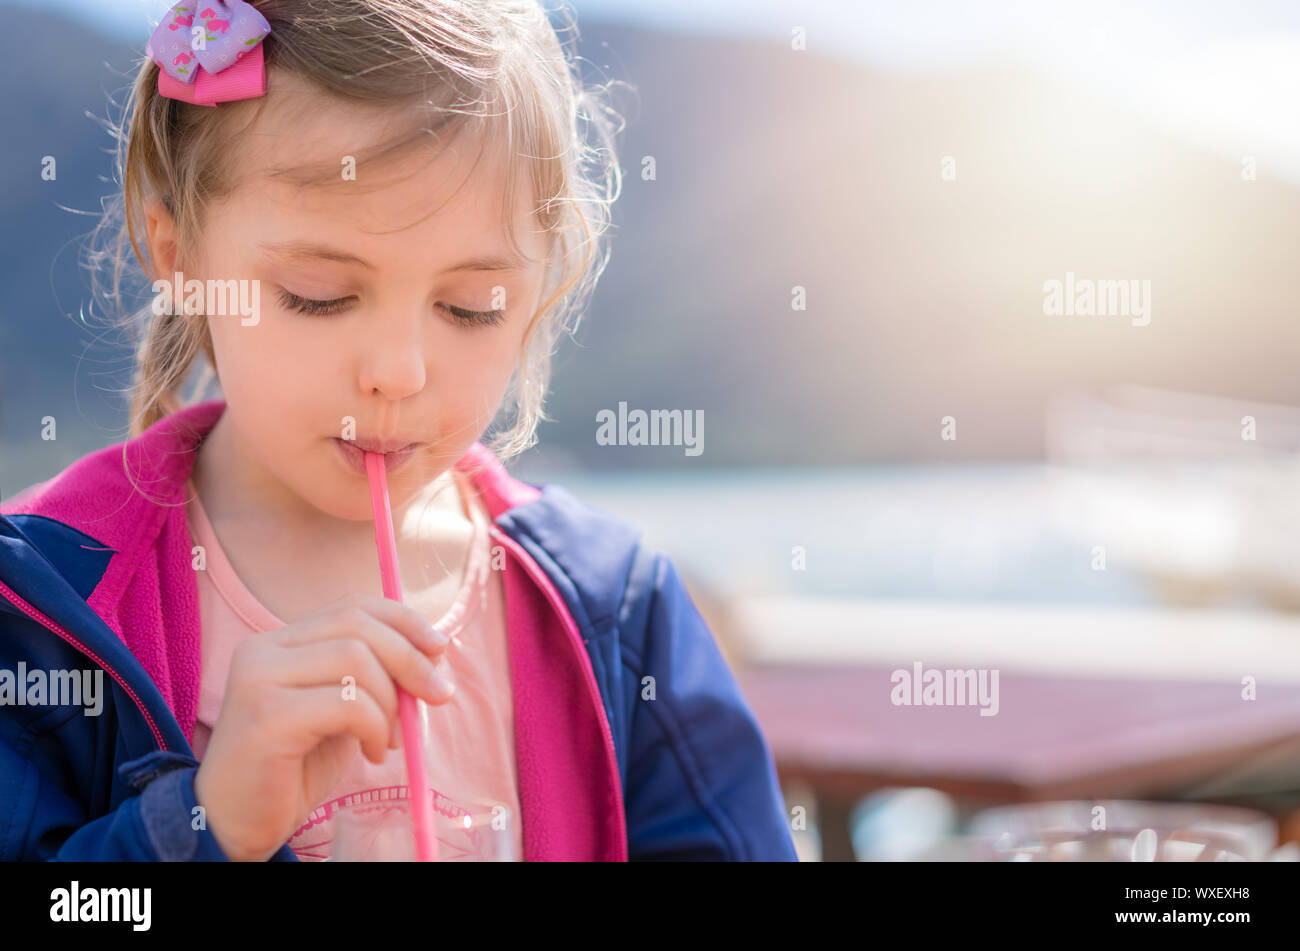 Cute little girl drinking fruit juice using straw Stock Photo